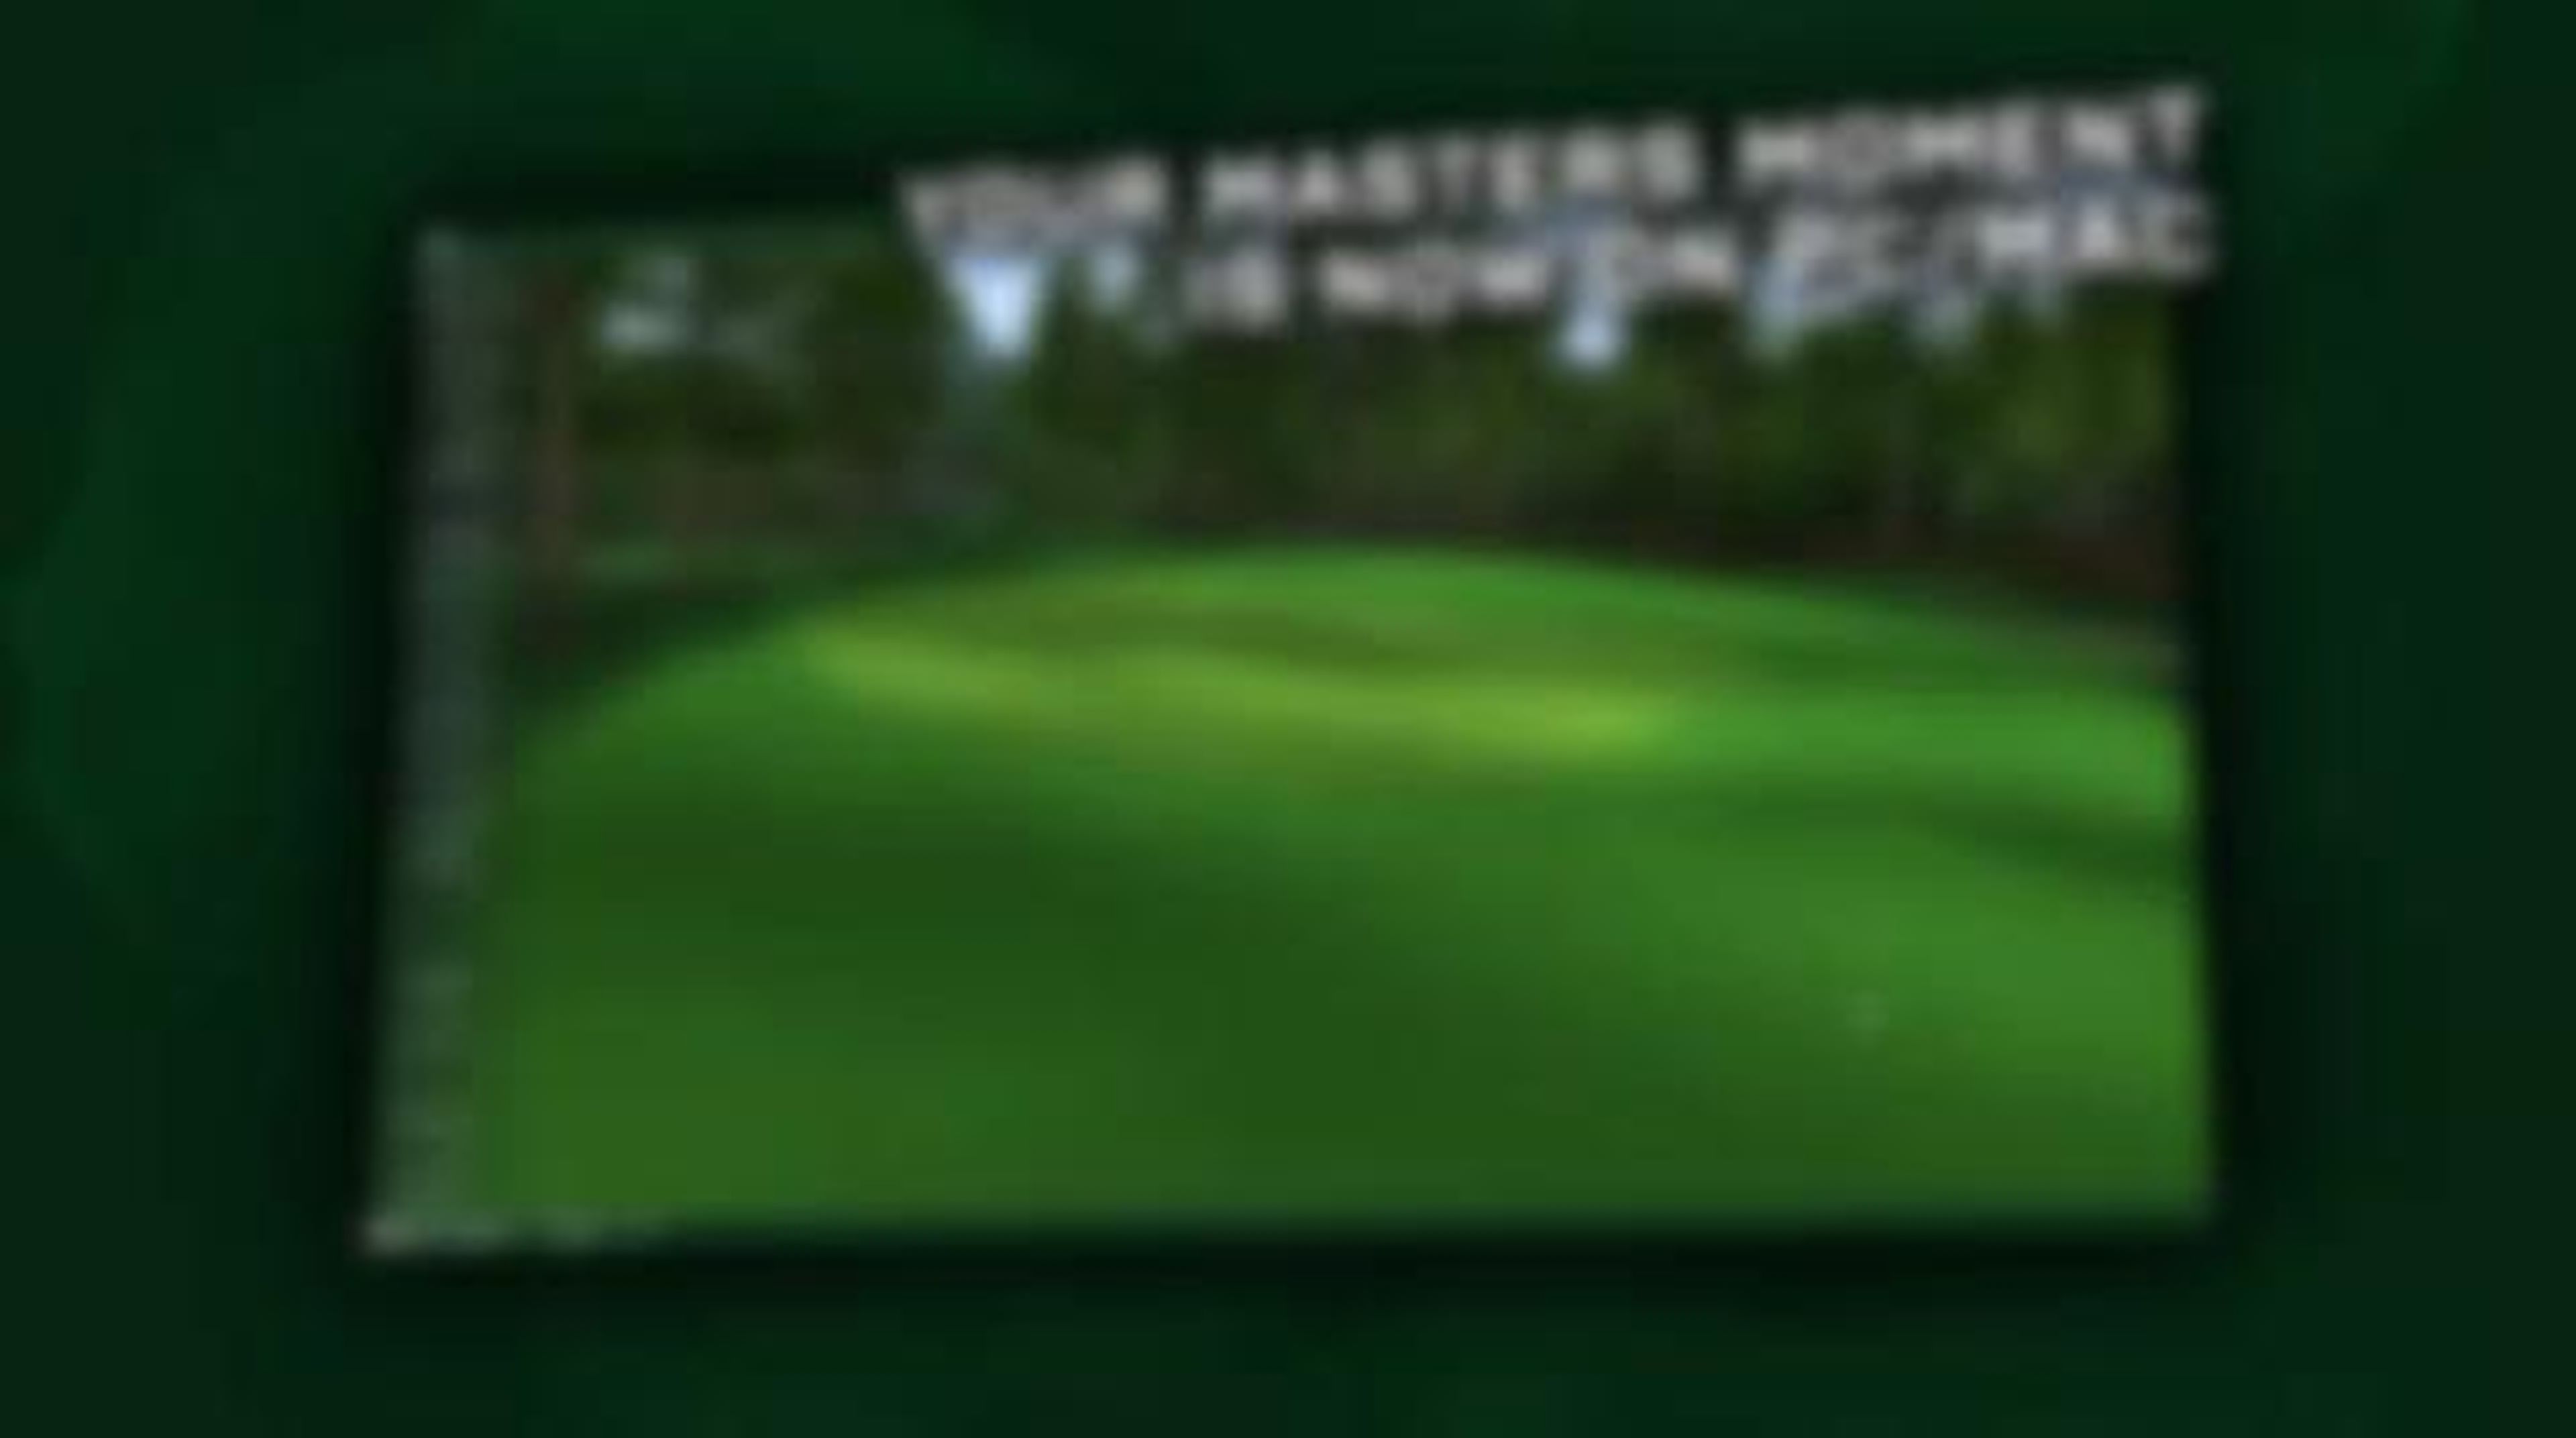 Tiger Woods PGA Tour 12 en HobbyNews.es